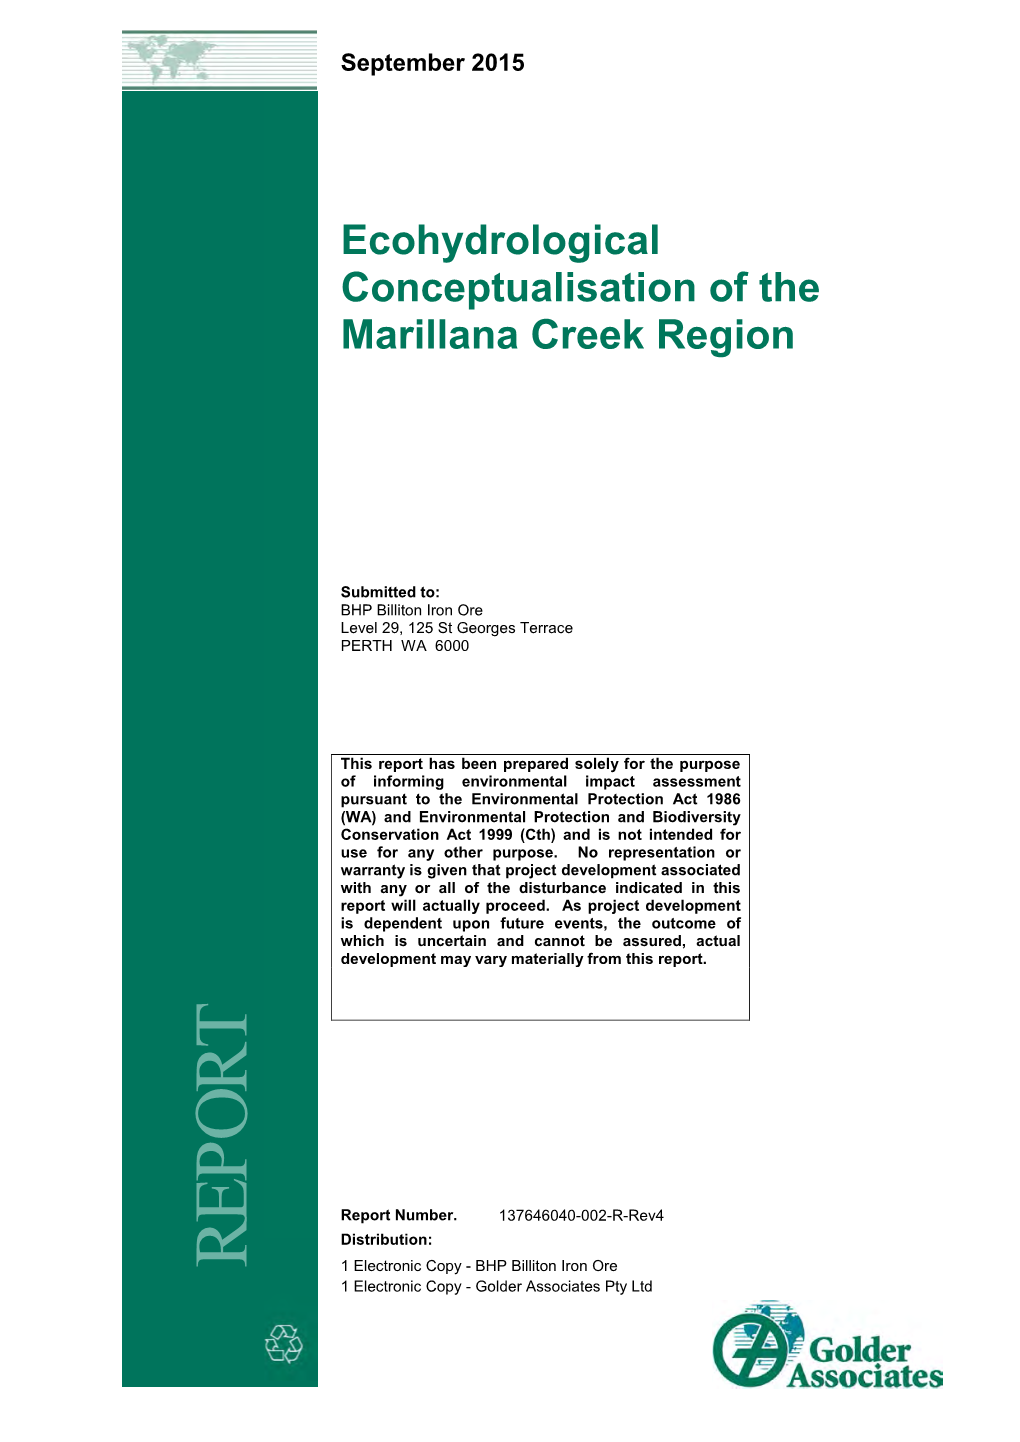 Ecohydrological Conceptualisation of the Marillana Creek Region